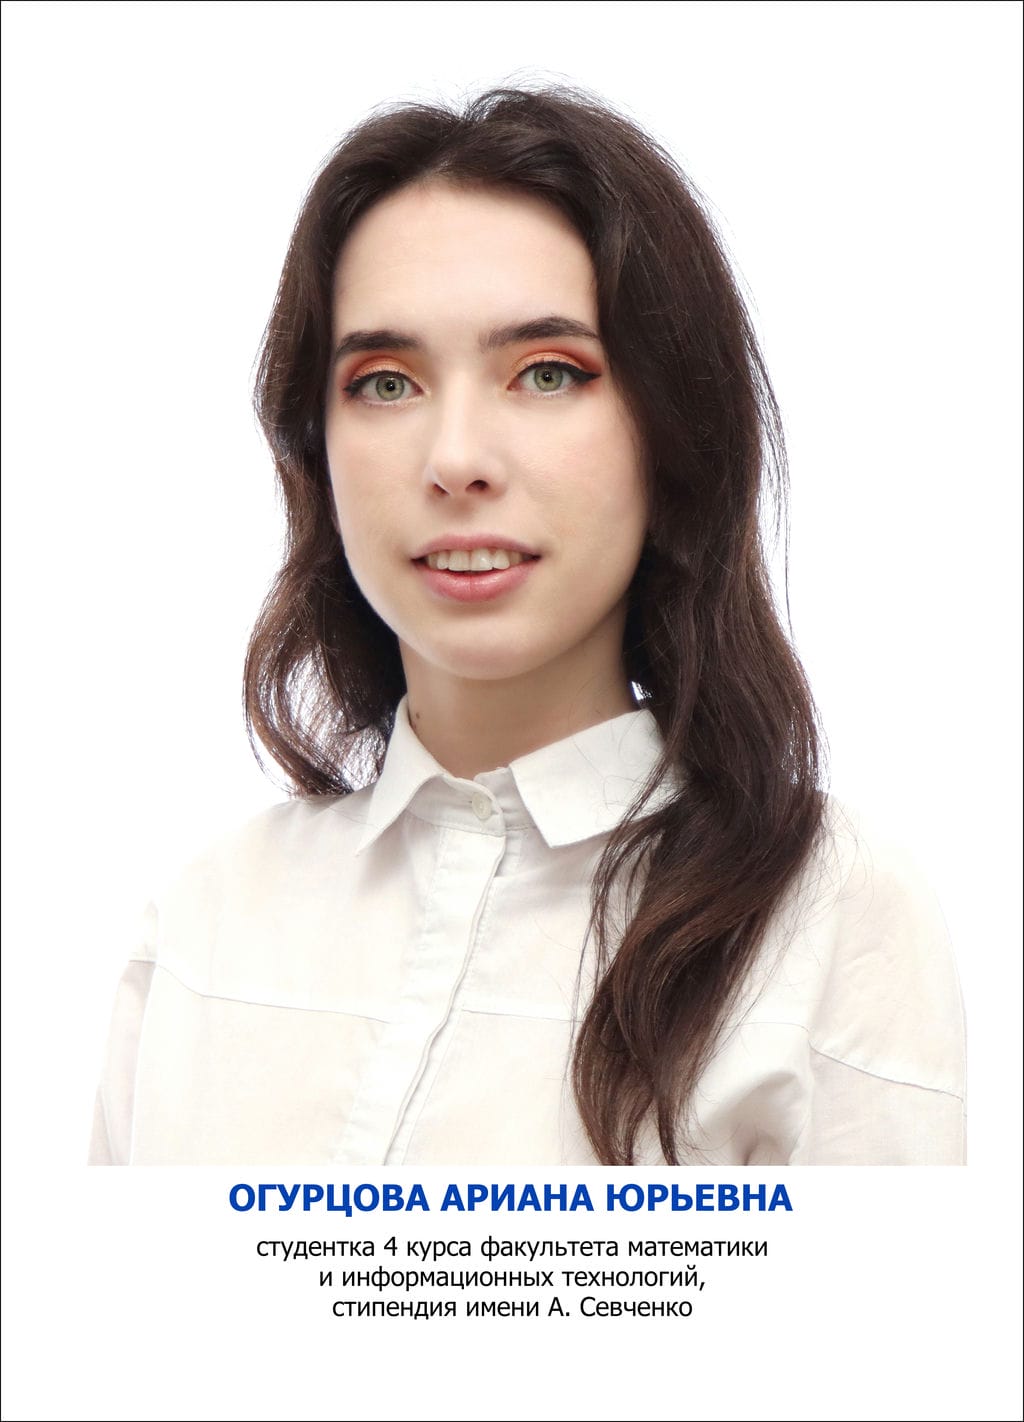 Огурцова Ариана Юрьевна